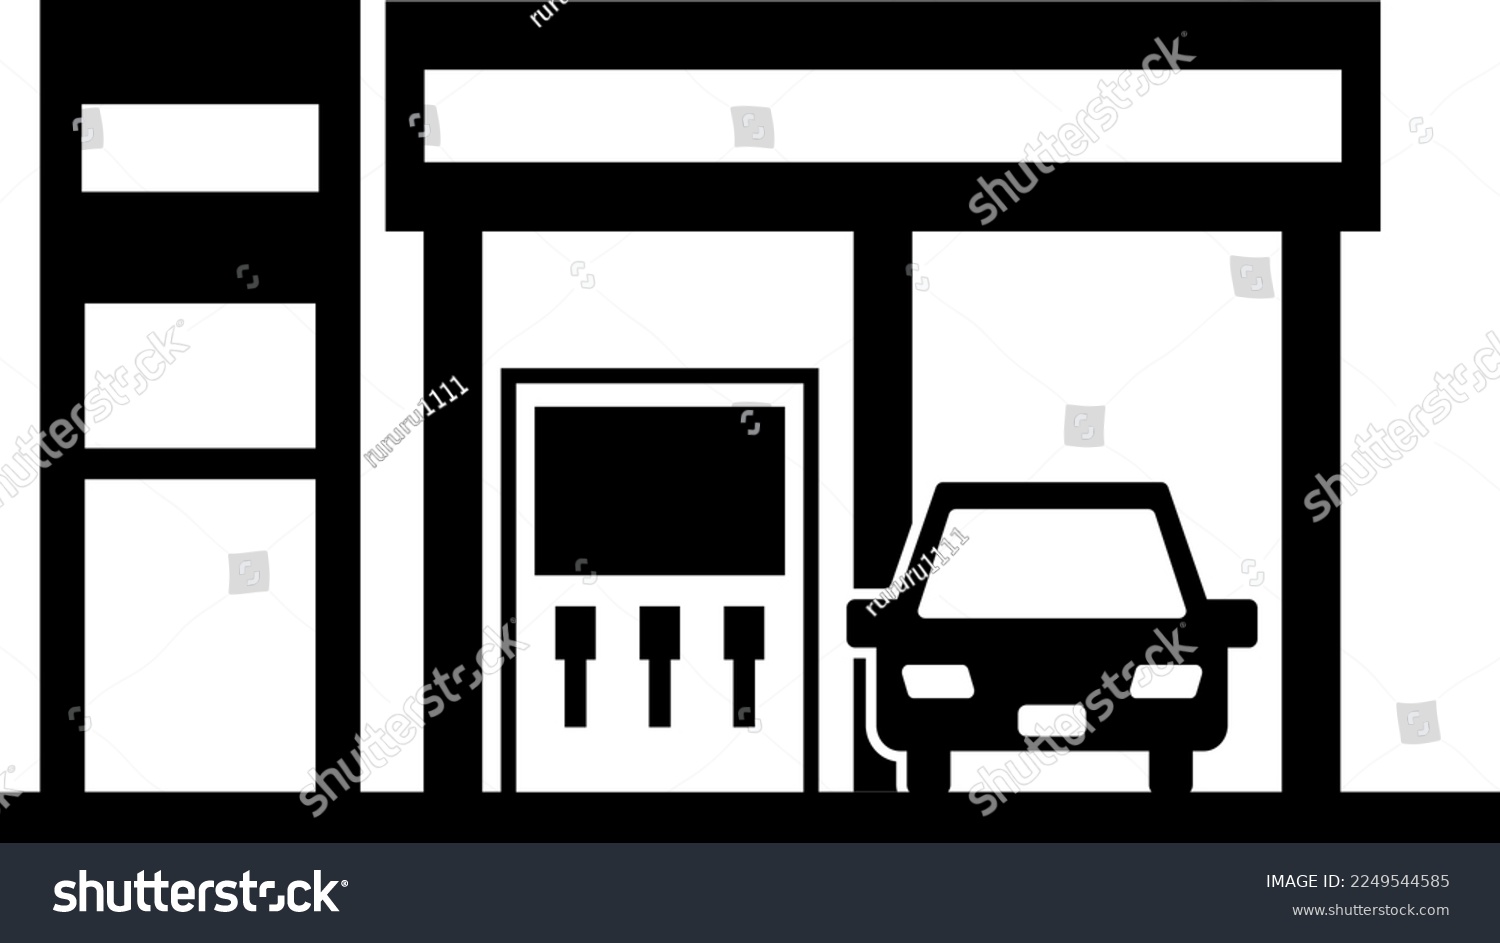 SVG of A simple illustration of a gas station svg